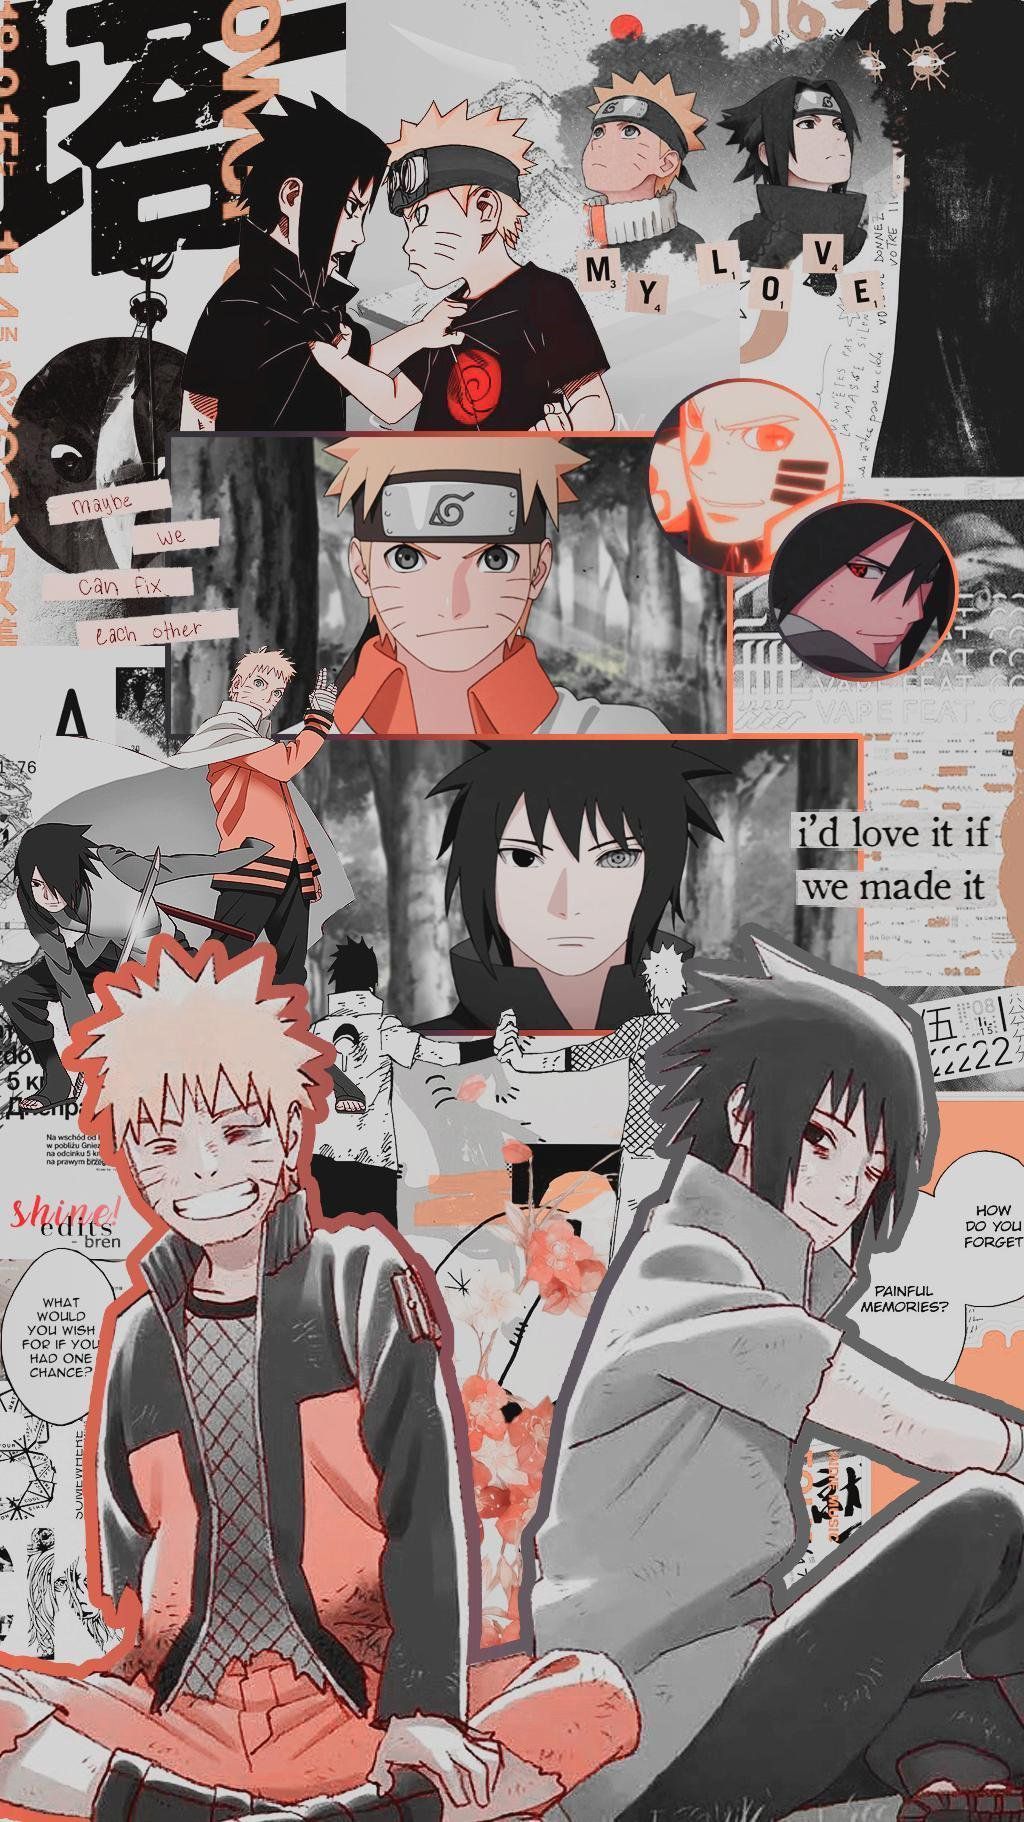 éclat! contrôles (commandes fermes) sur. Naruto and sasuke wallpaper, Wallpaper naruto shippuden, Cute anime wallpaper